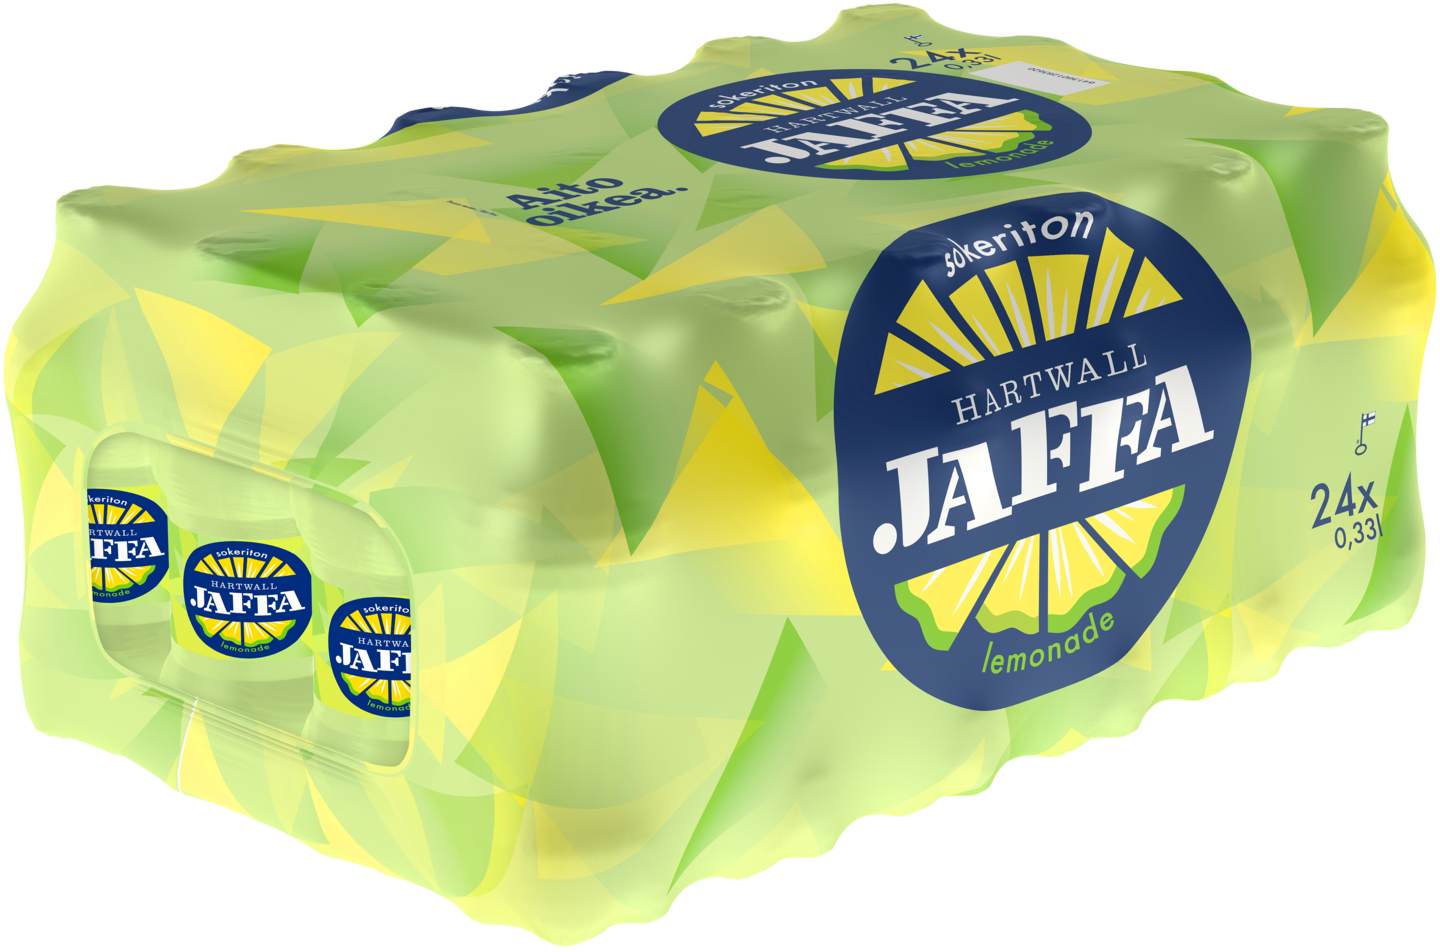 Hartwall Jaffa Lemonade sokeriton virvoitusjuoma 0,33l 24-pack